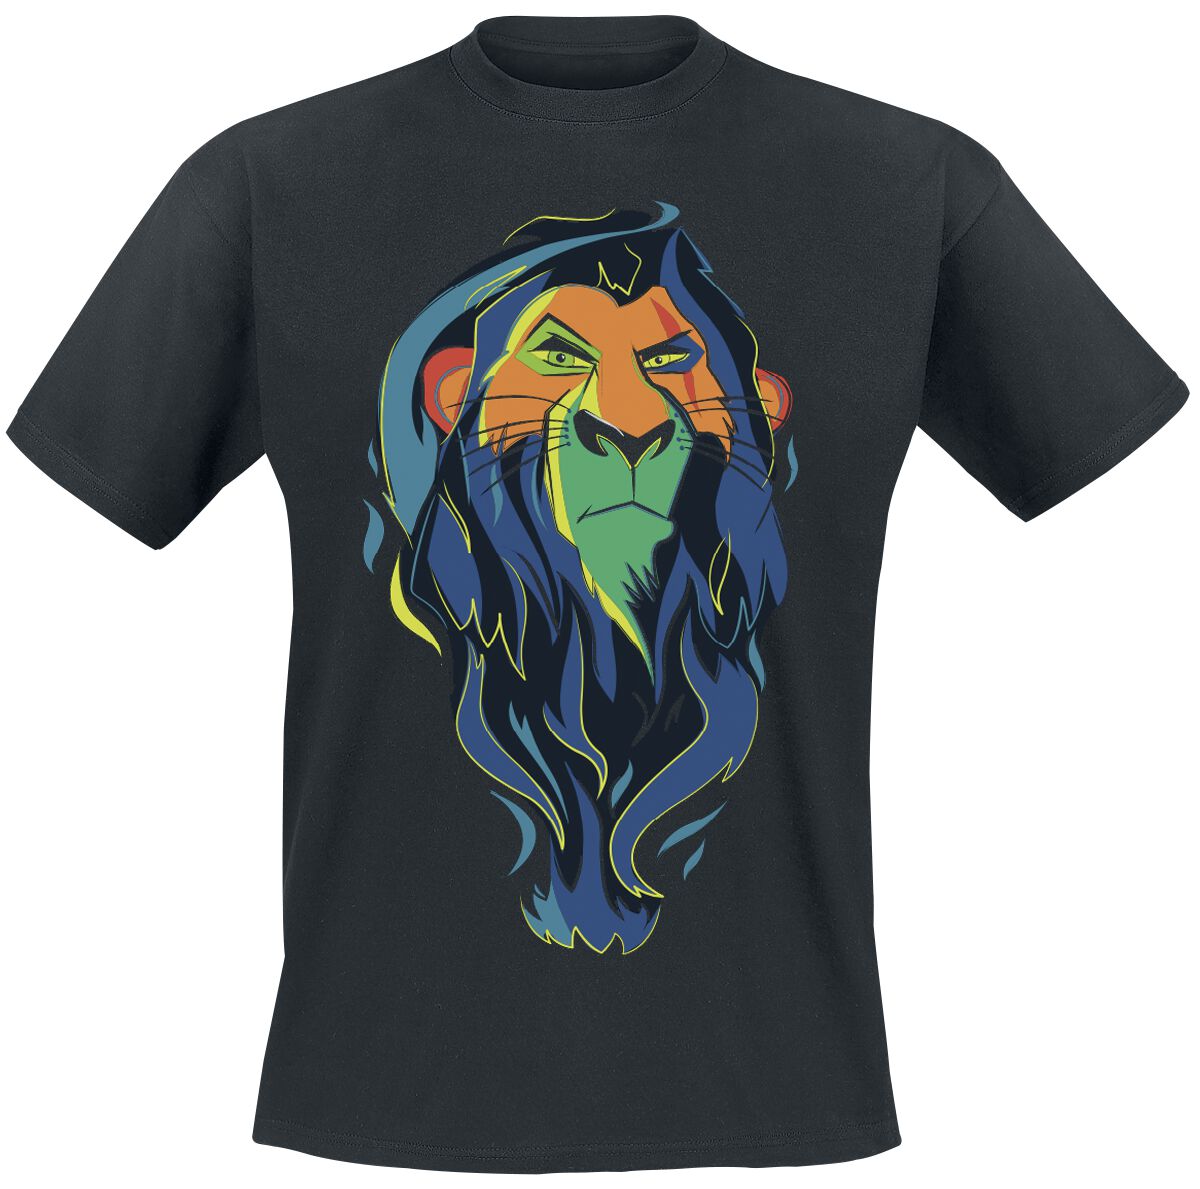 The Lion King Scar T-Shirt black